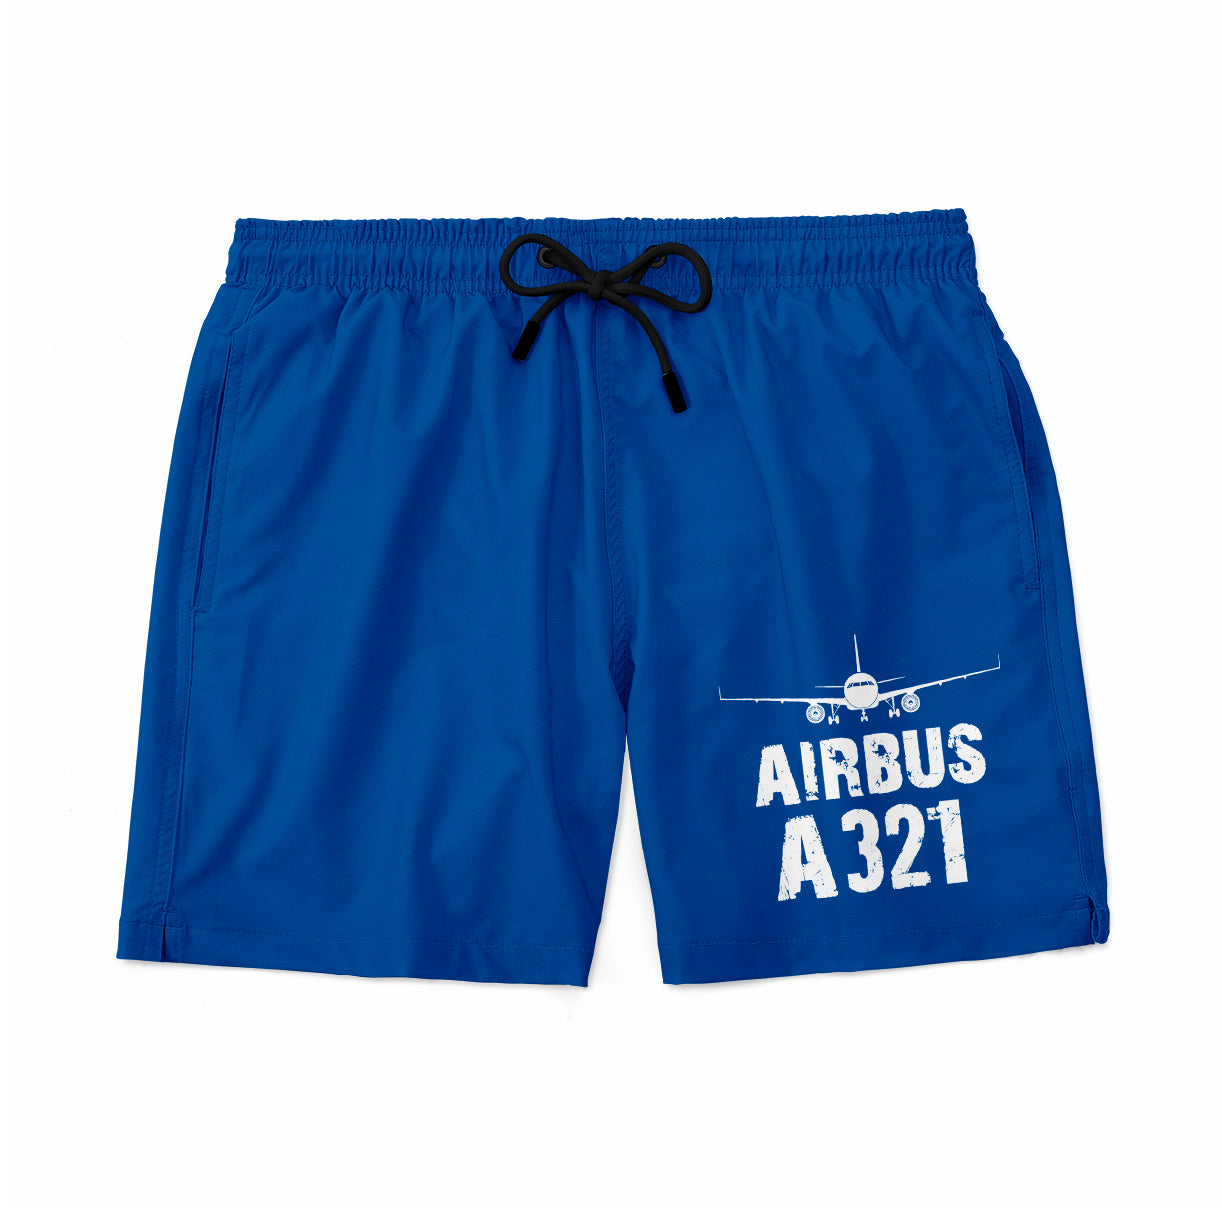 Airbus A321 & Plane Designed Swim Trunks & Shorts